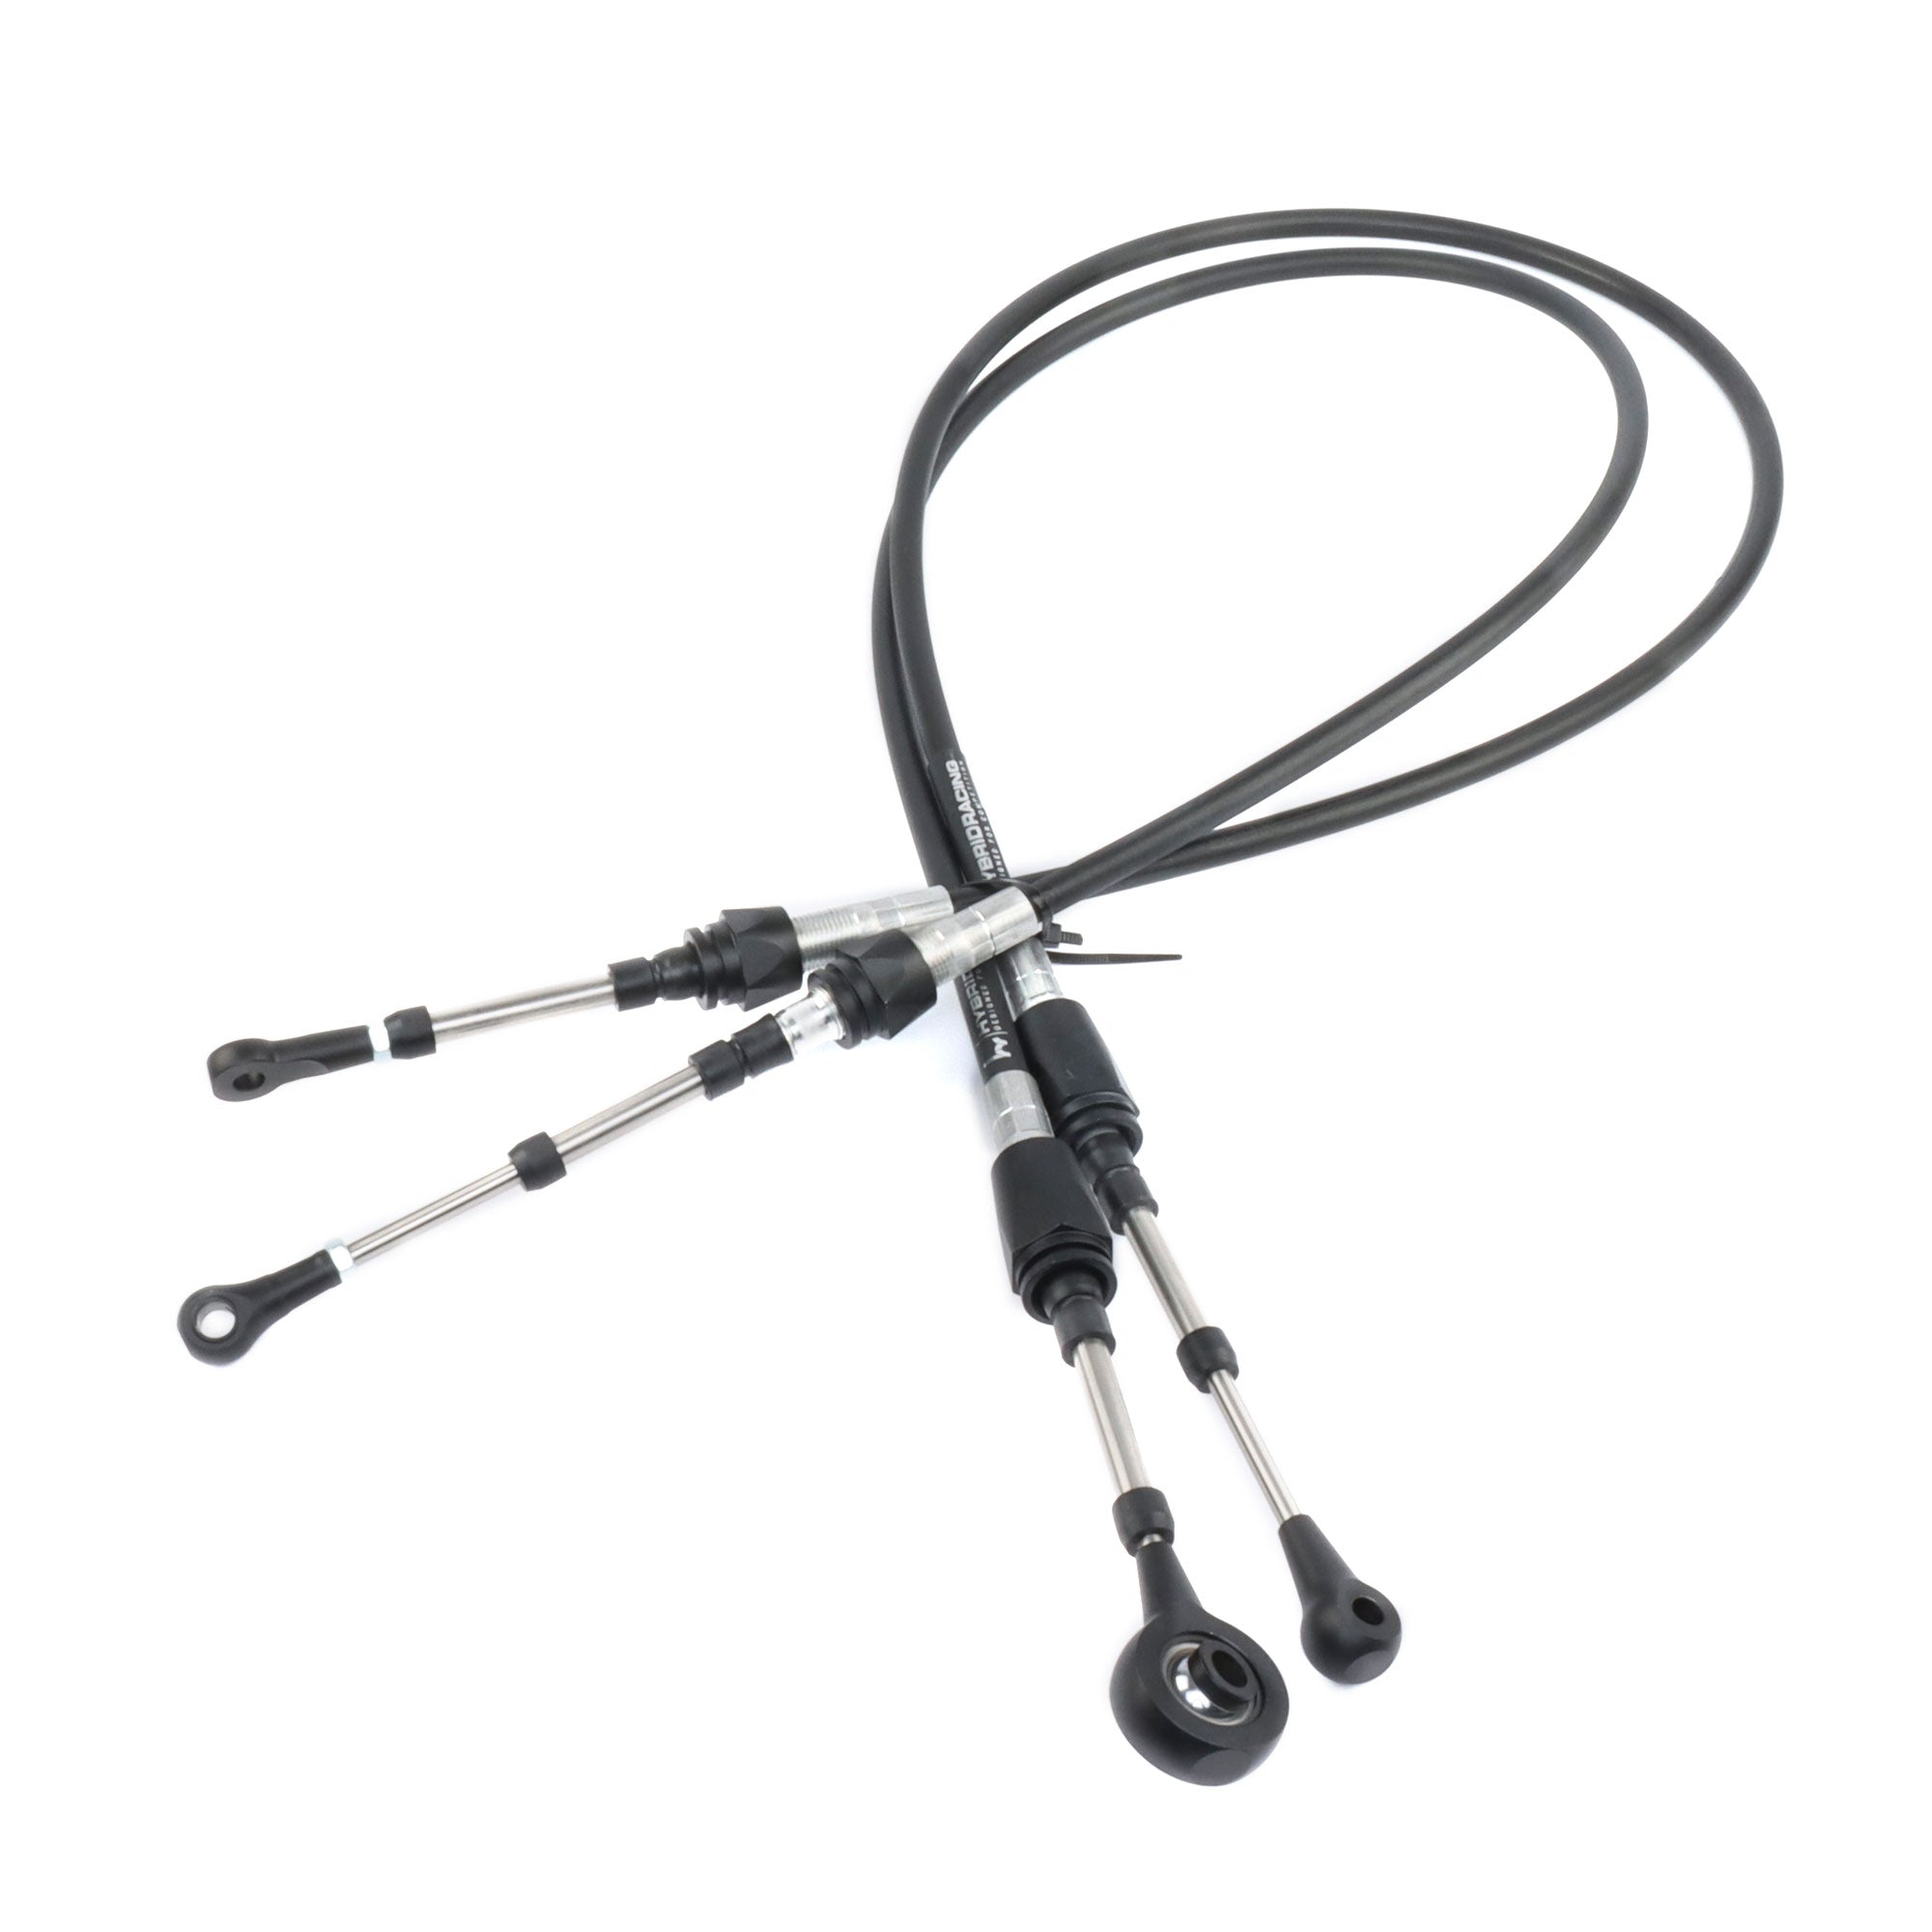 Honda Sound Works Premium Love Cable 3m - エレキギター